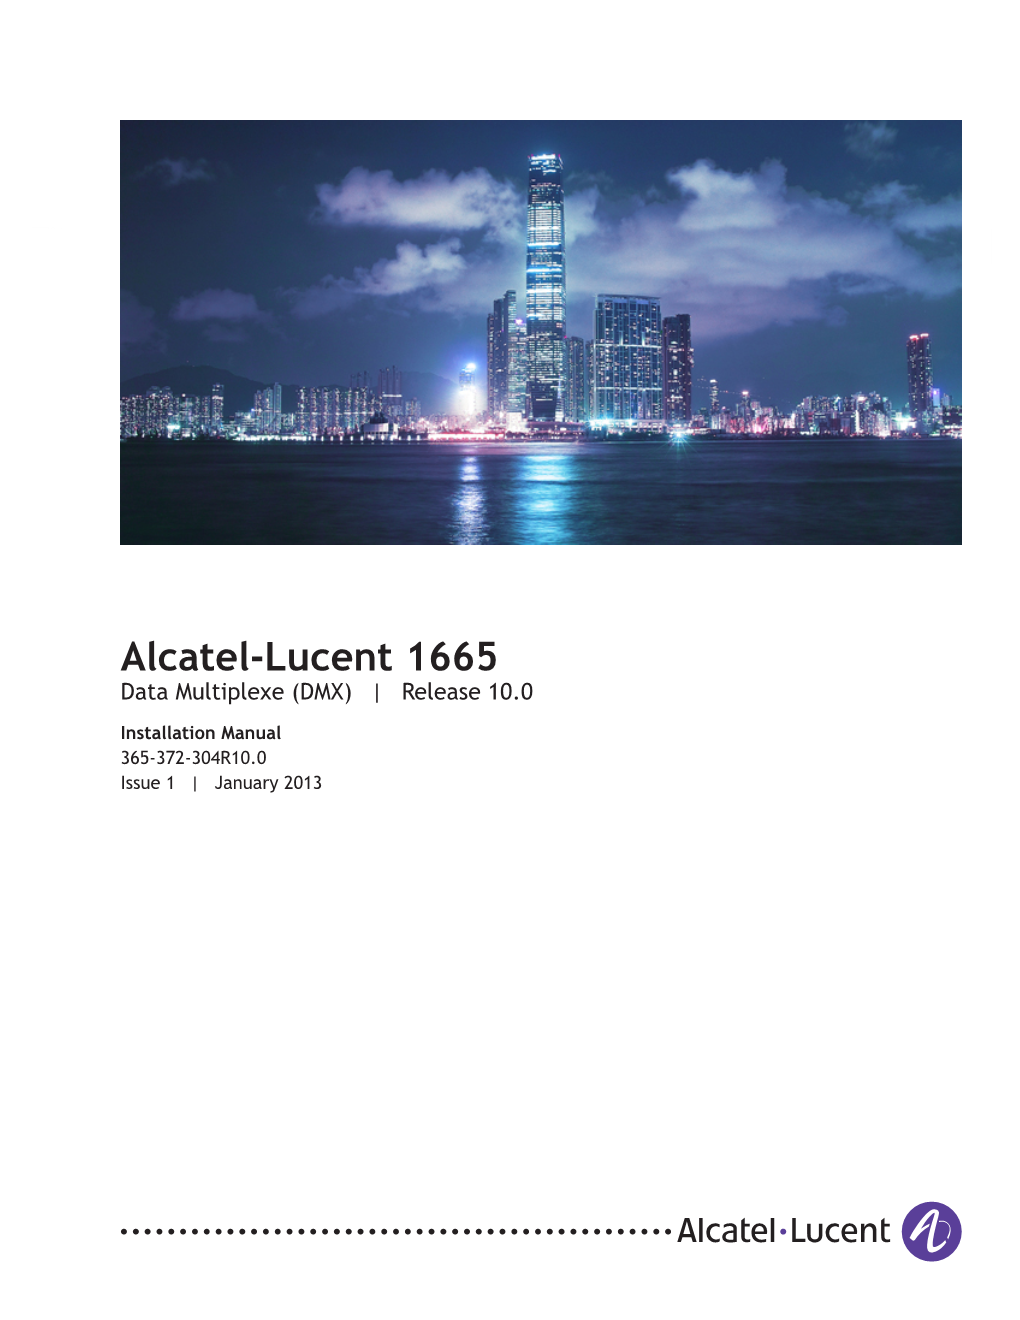 Alcatel-Lucent 1665 Data Multiplexer (1665 DMX) Release 10.0 Installation Manual